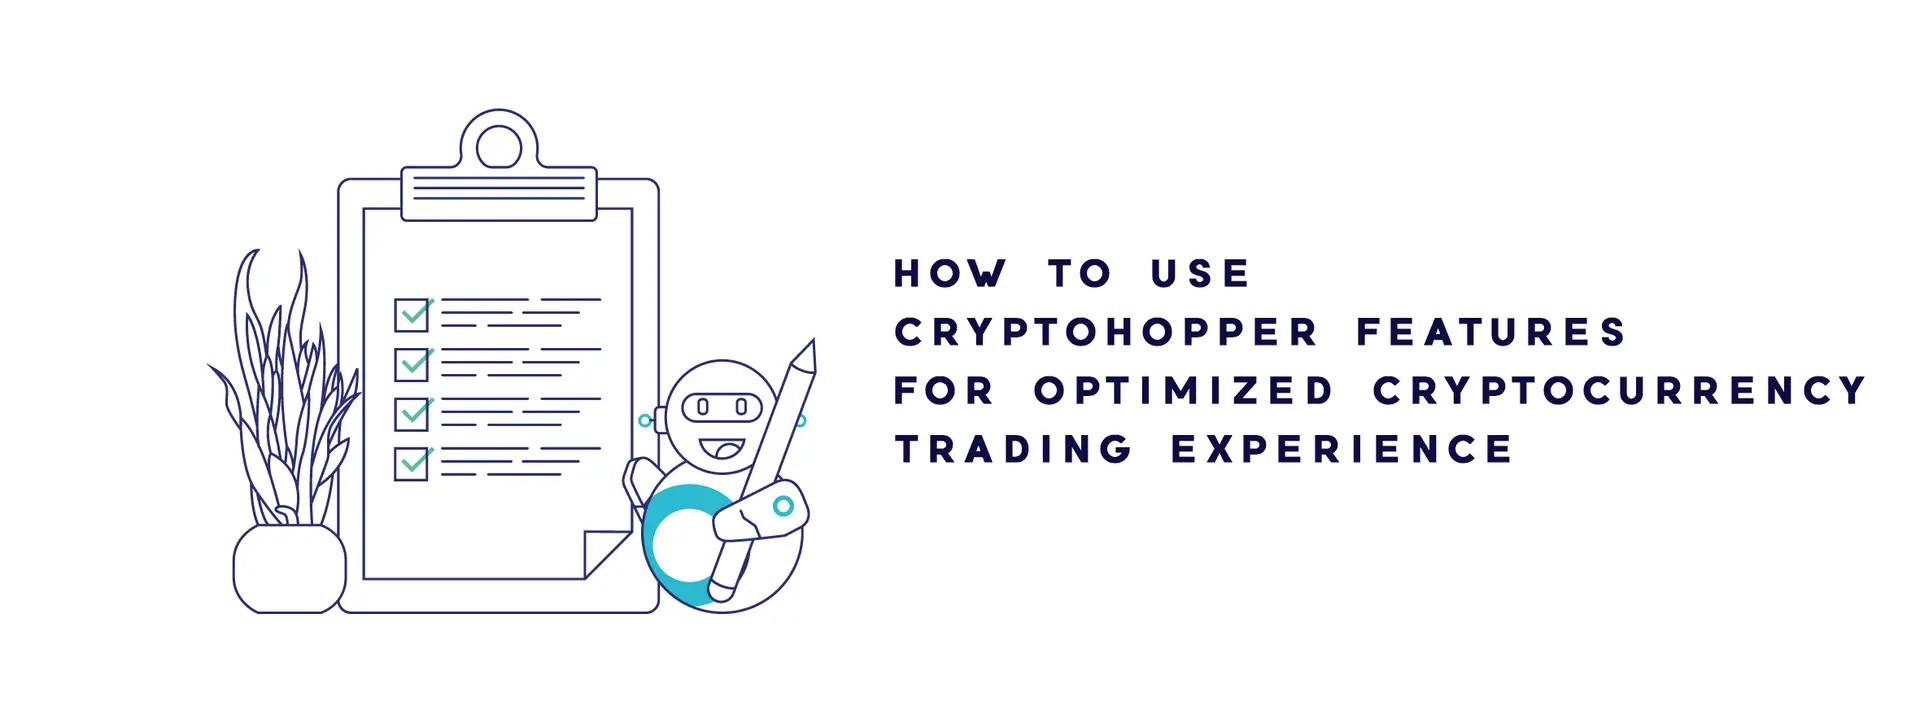 Platform | How To Use Cryptohopper